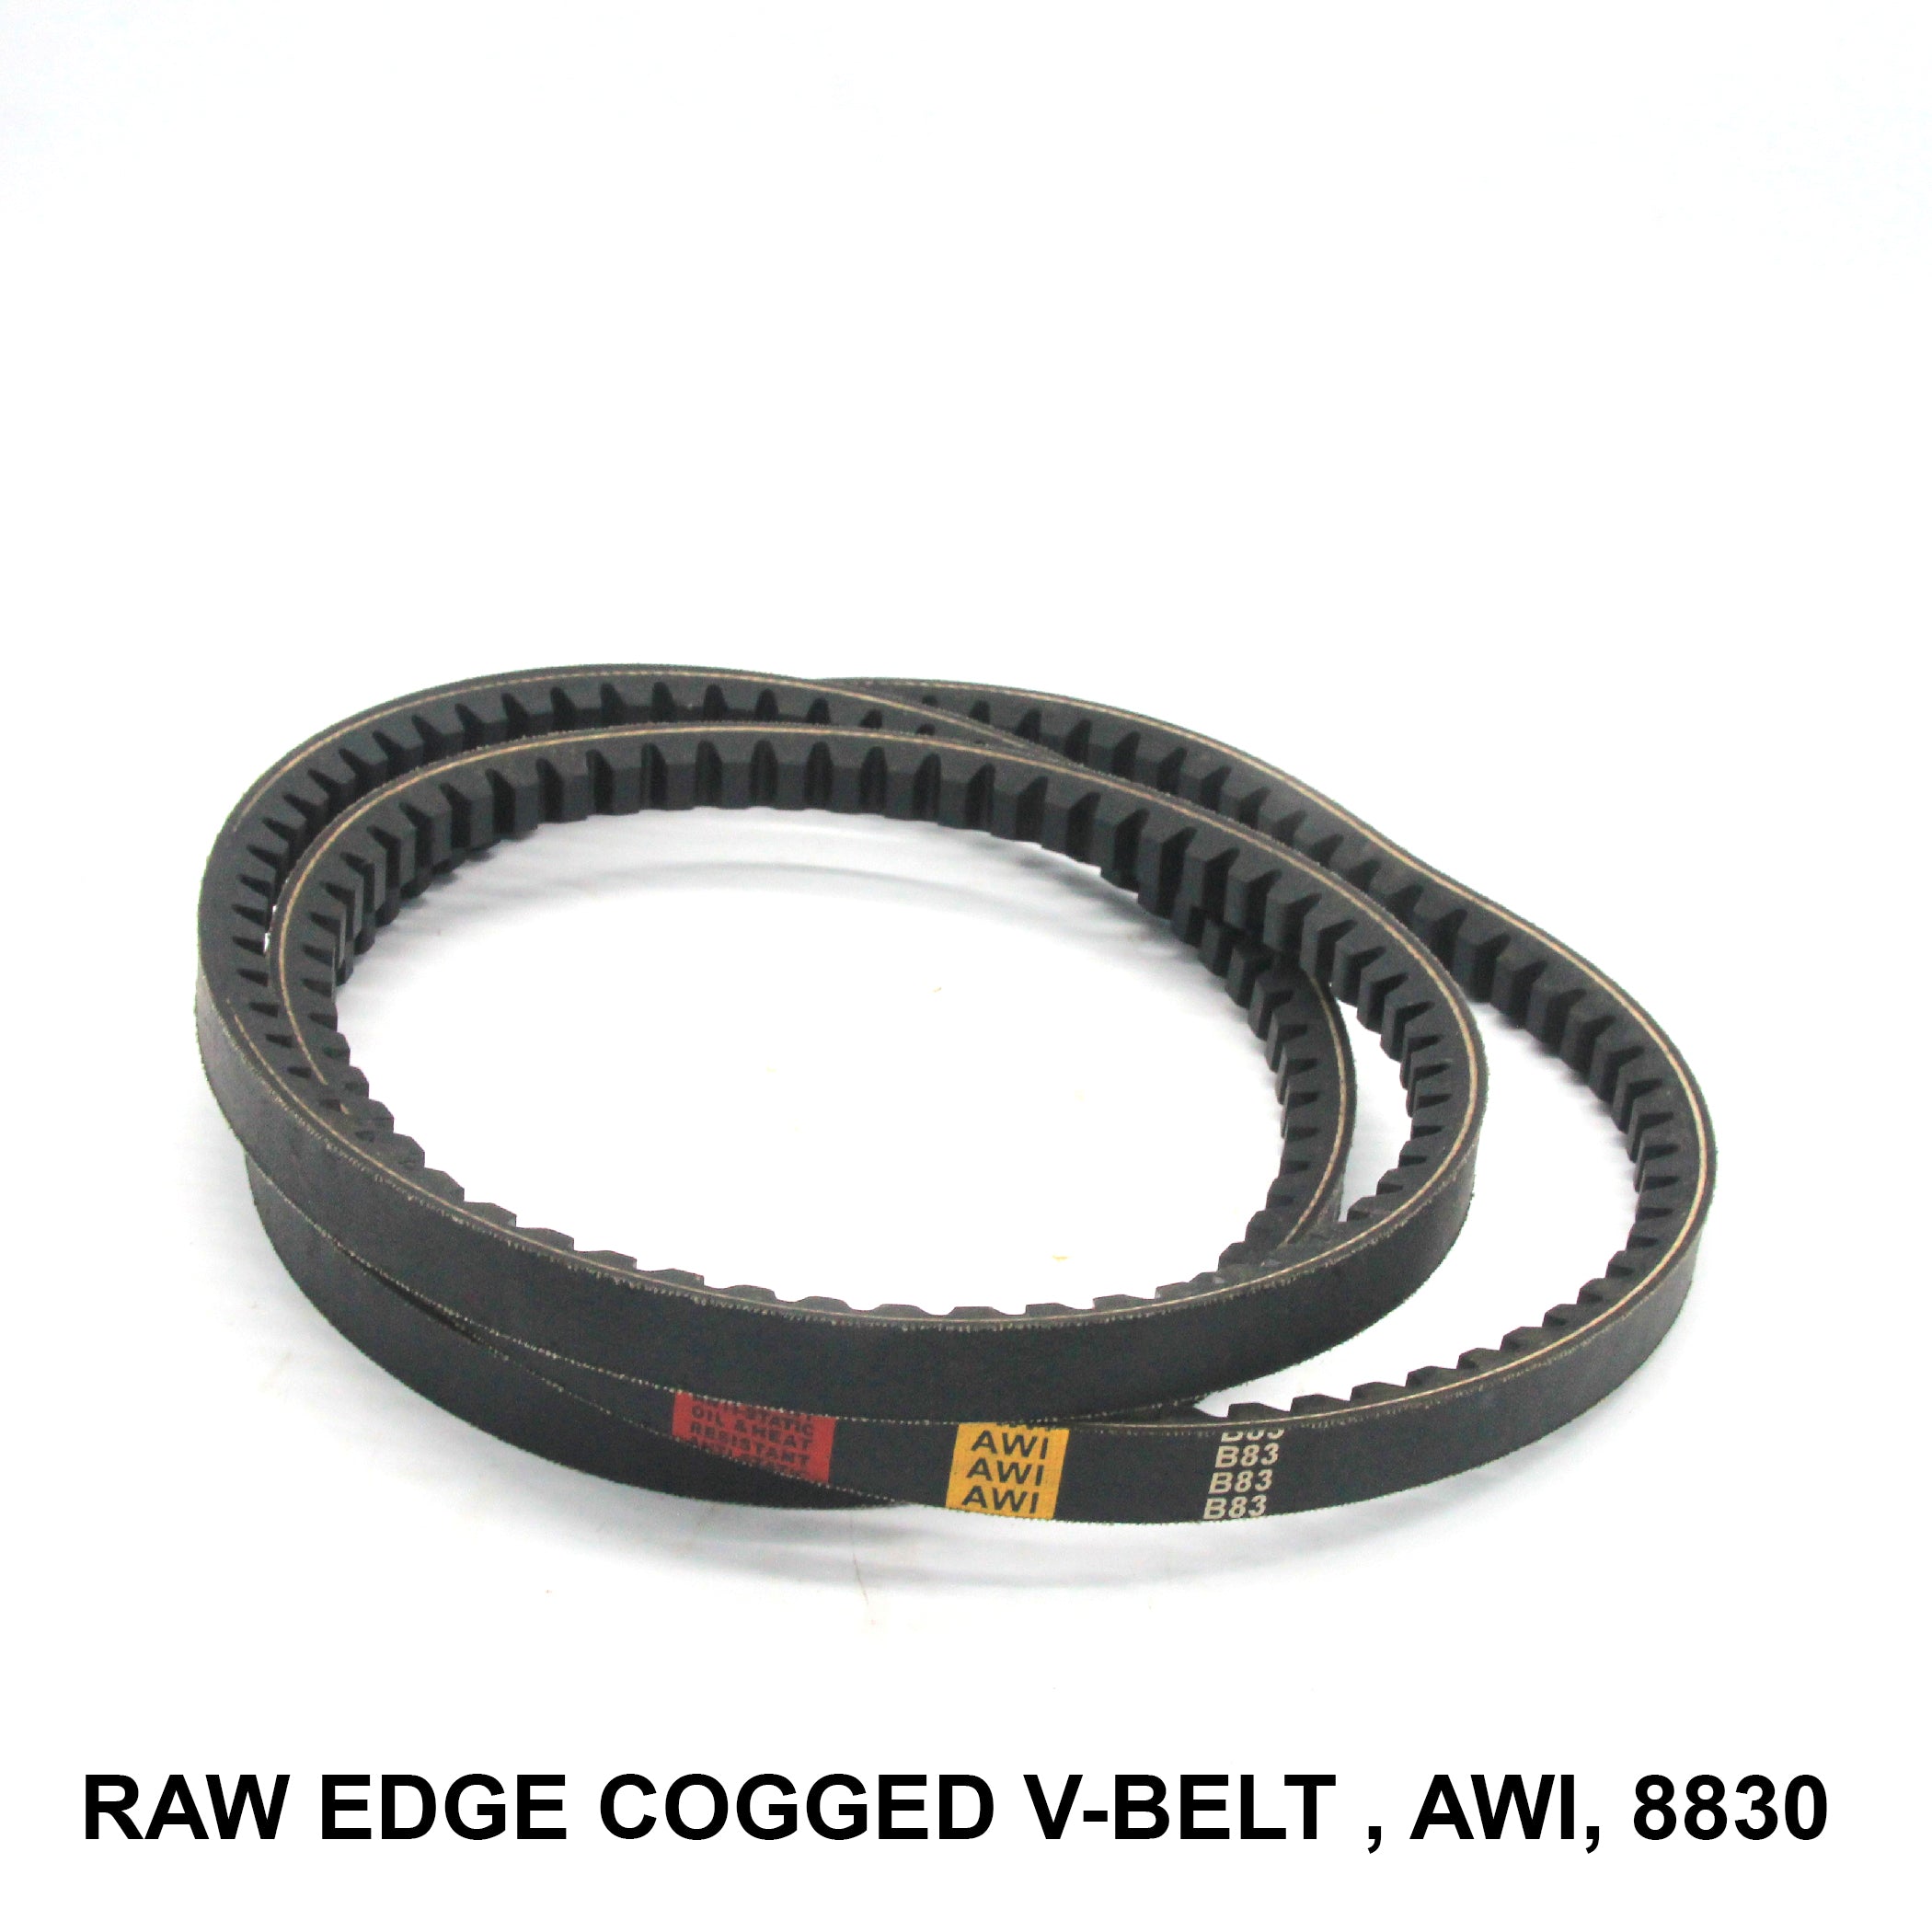 Raw Edge Cogged V-belt (RECMF) with AWI Technology